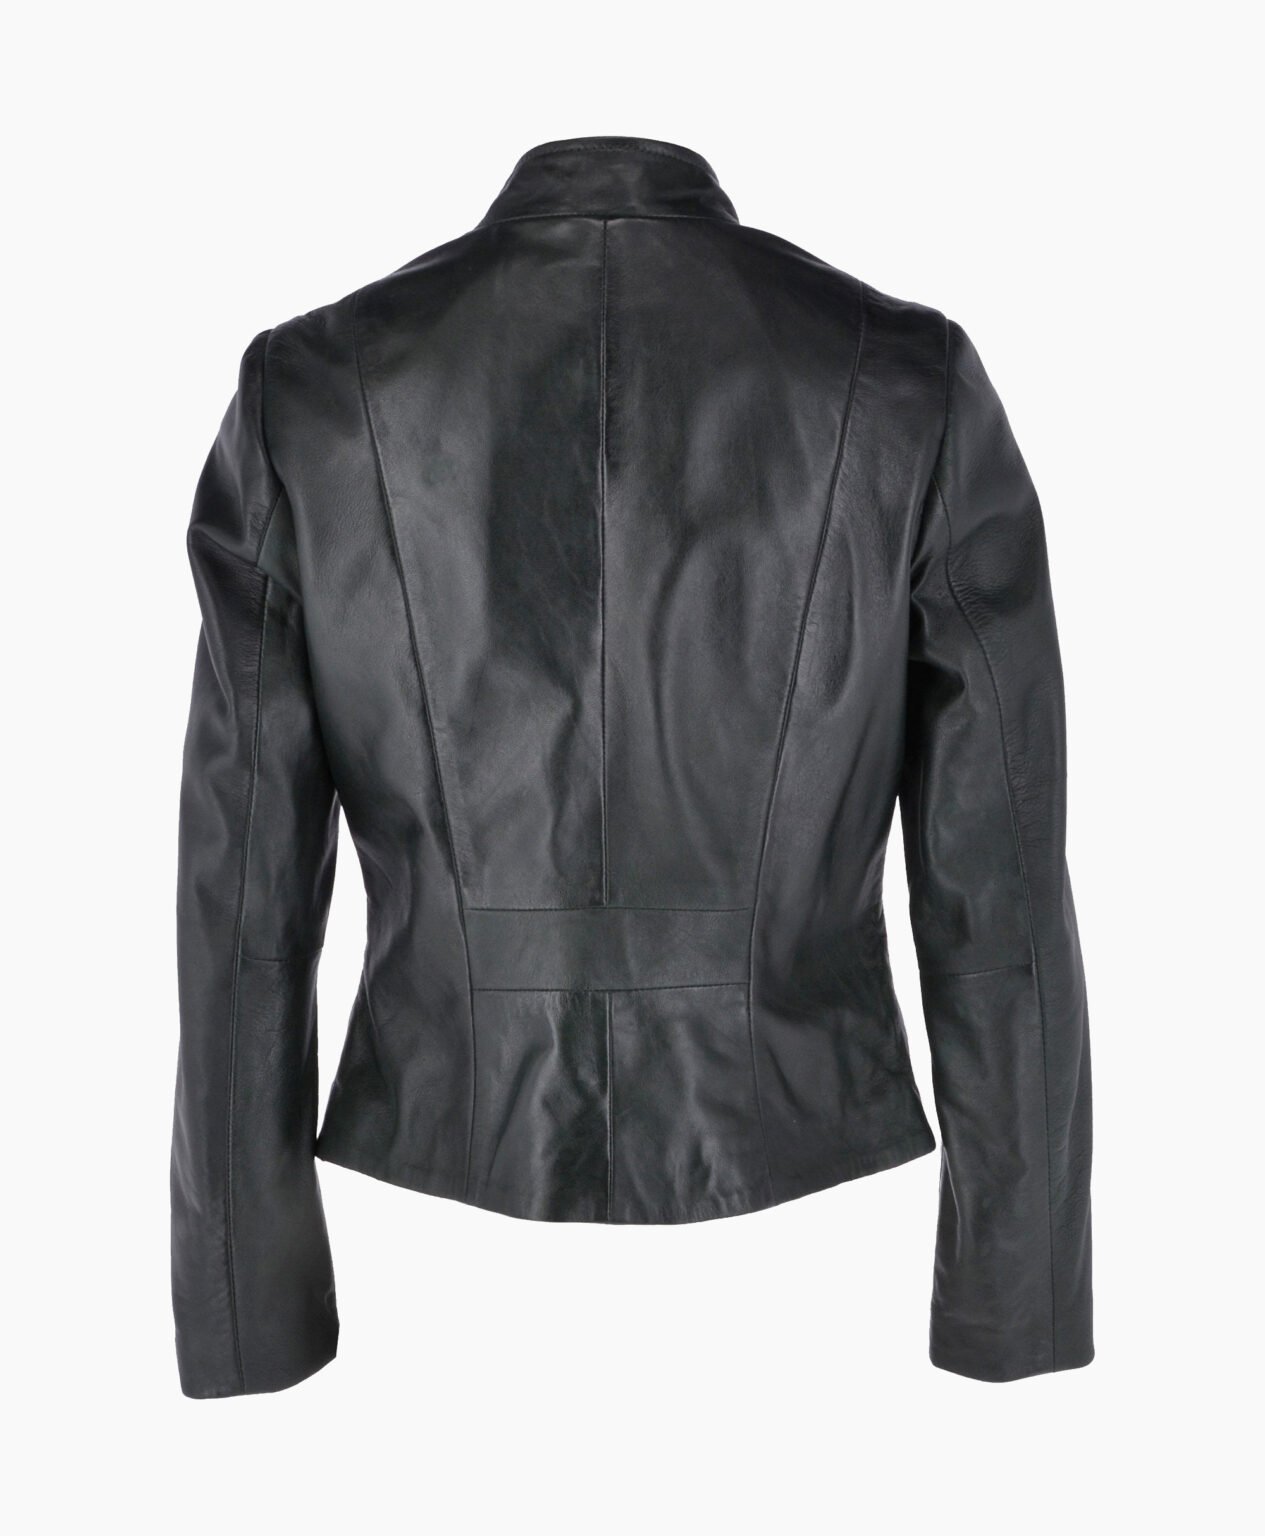 vogue-jacket-leather-jacket-black-climax-image202